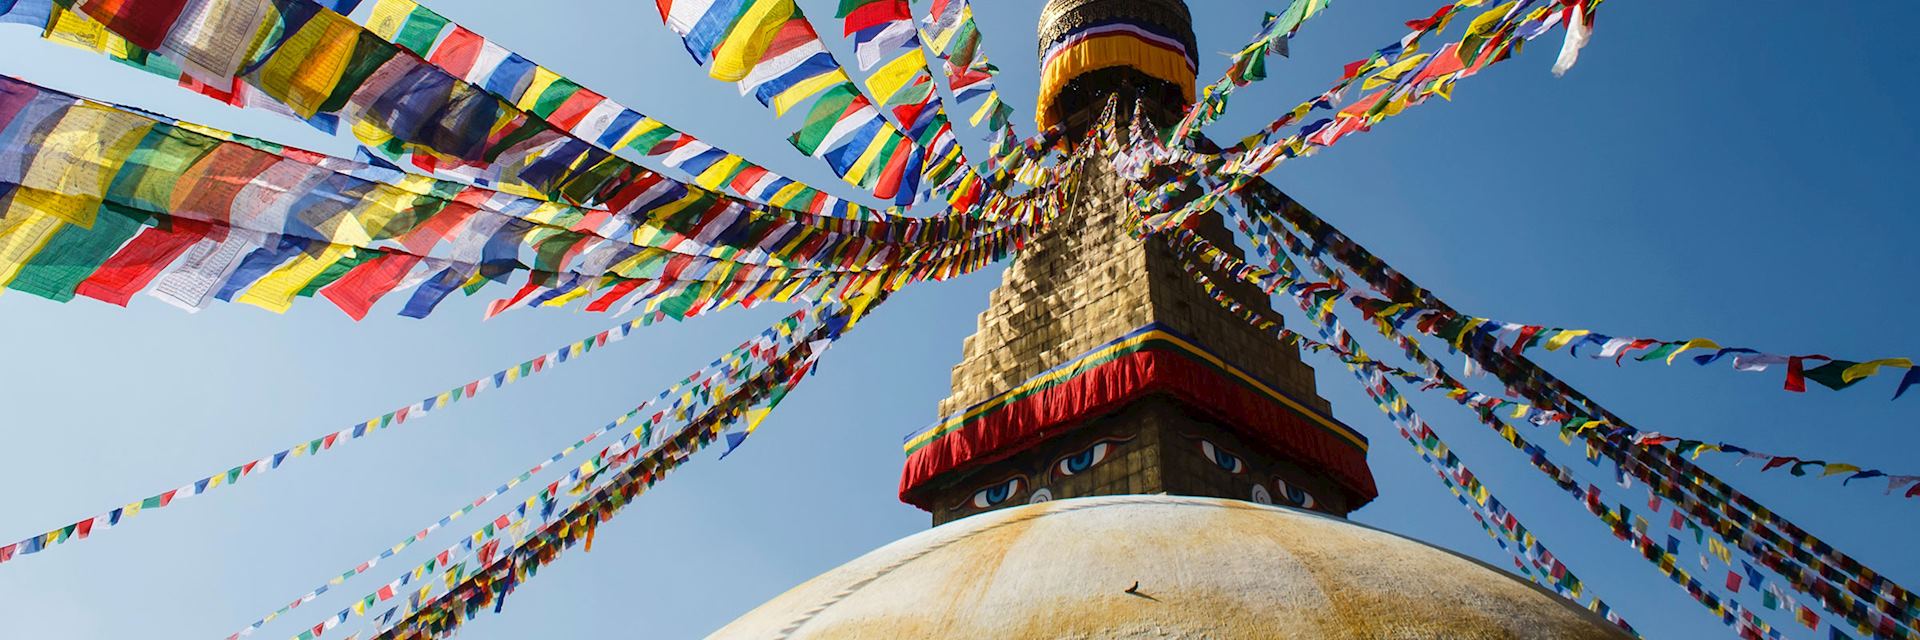 Prayer flags flying from a stupa in Kathmandu